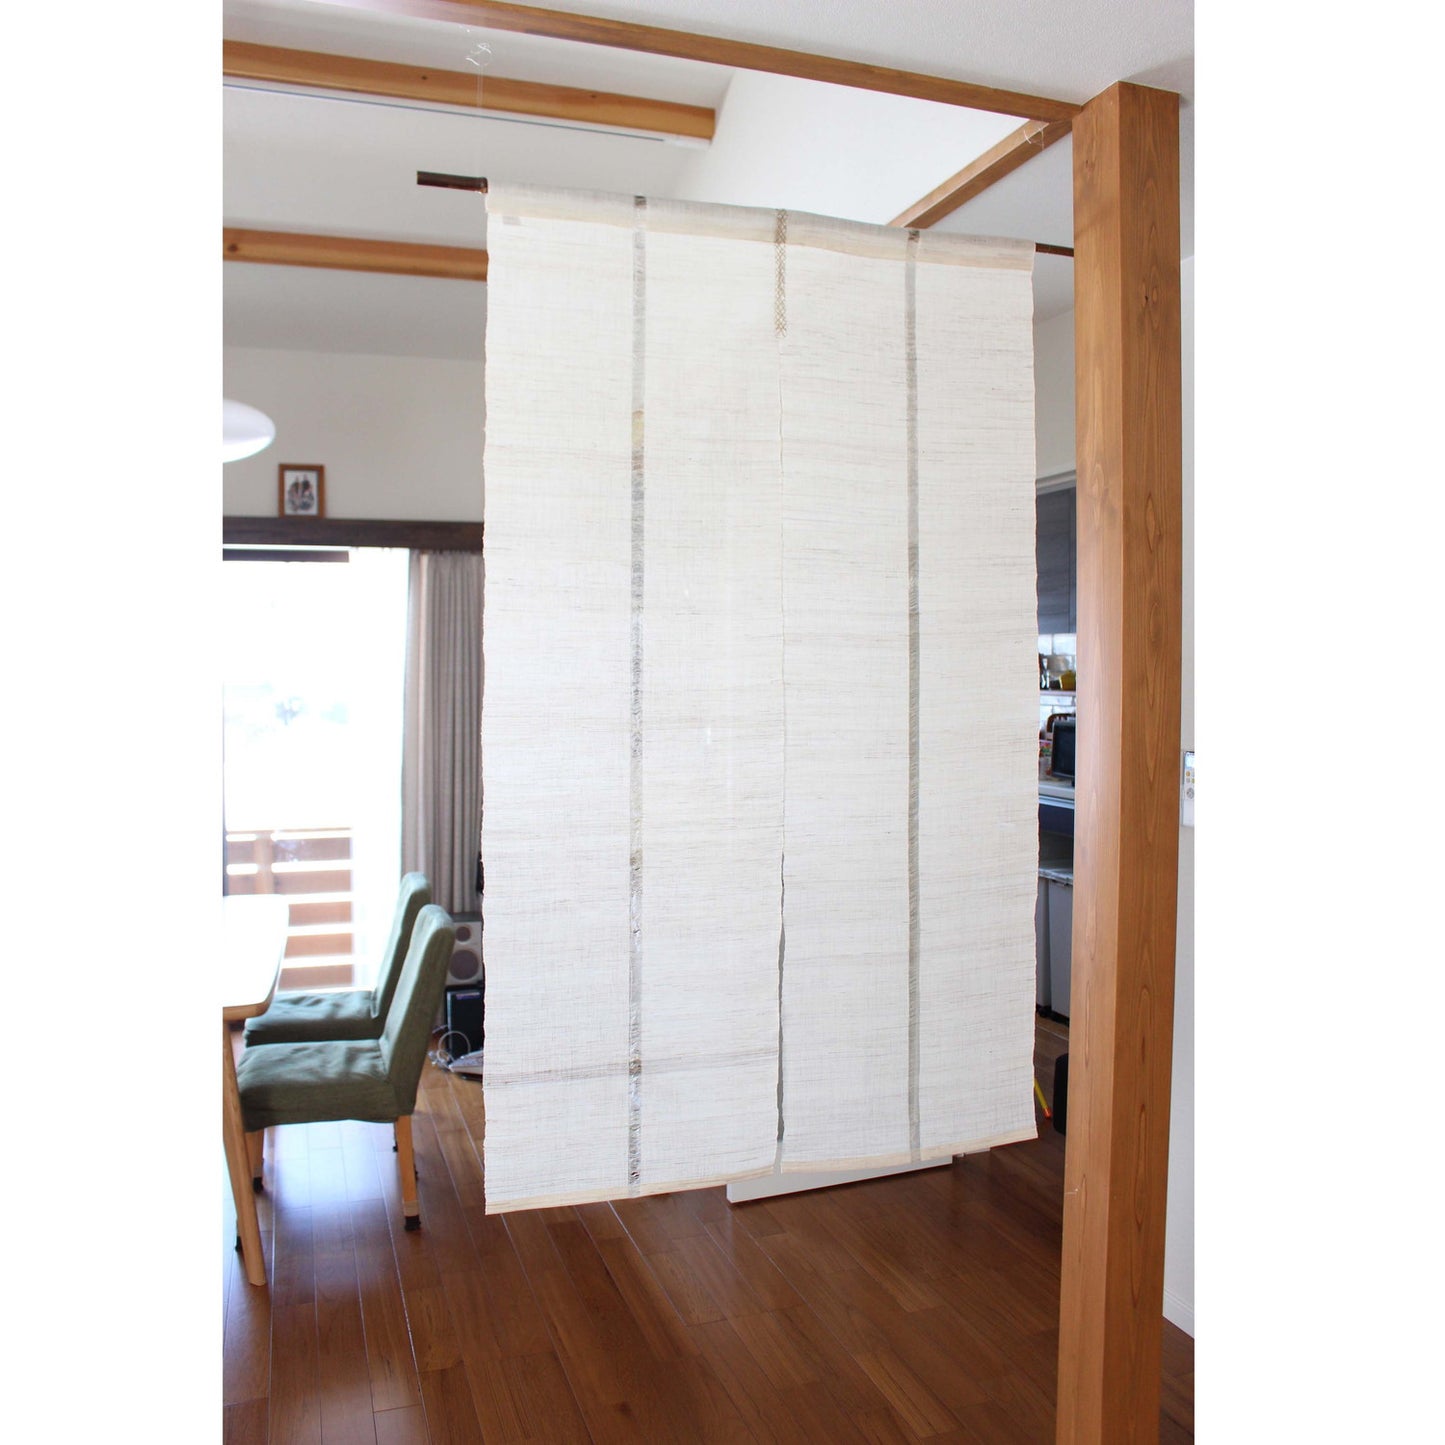 Japanese Curtain (Noren) / Ramie / IONO-Woven / Plain White / W90xH150cm